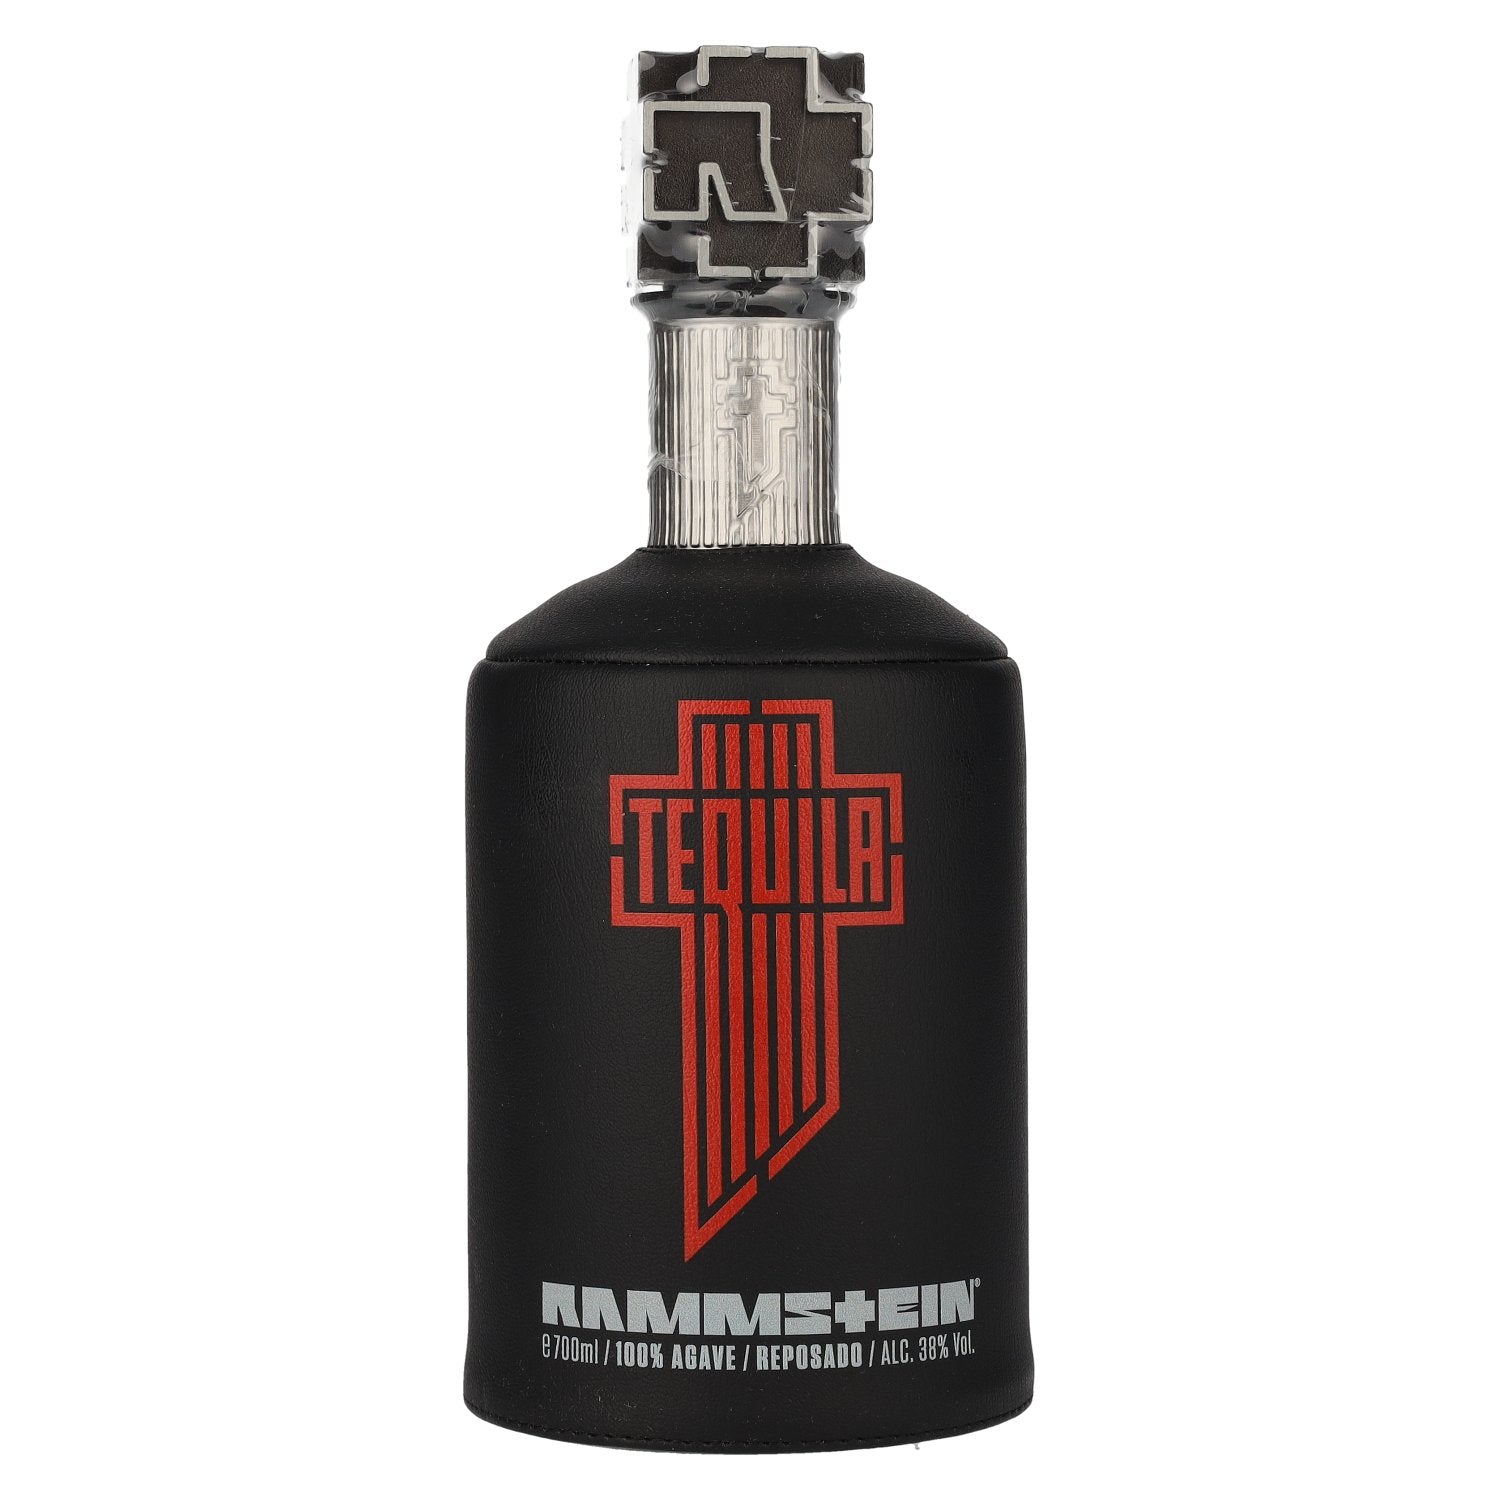 Rammstein Tequila 38% 100% Reposado 0,7l Vol. Agave